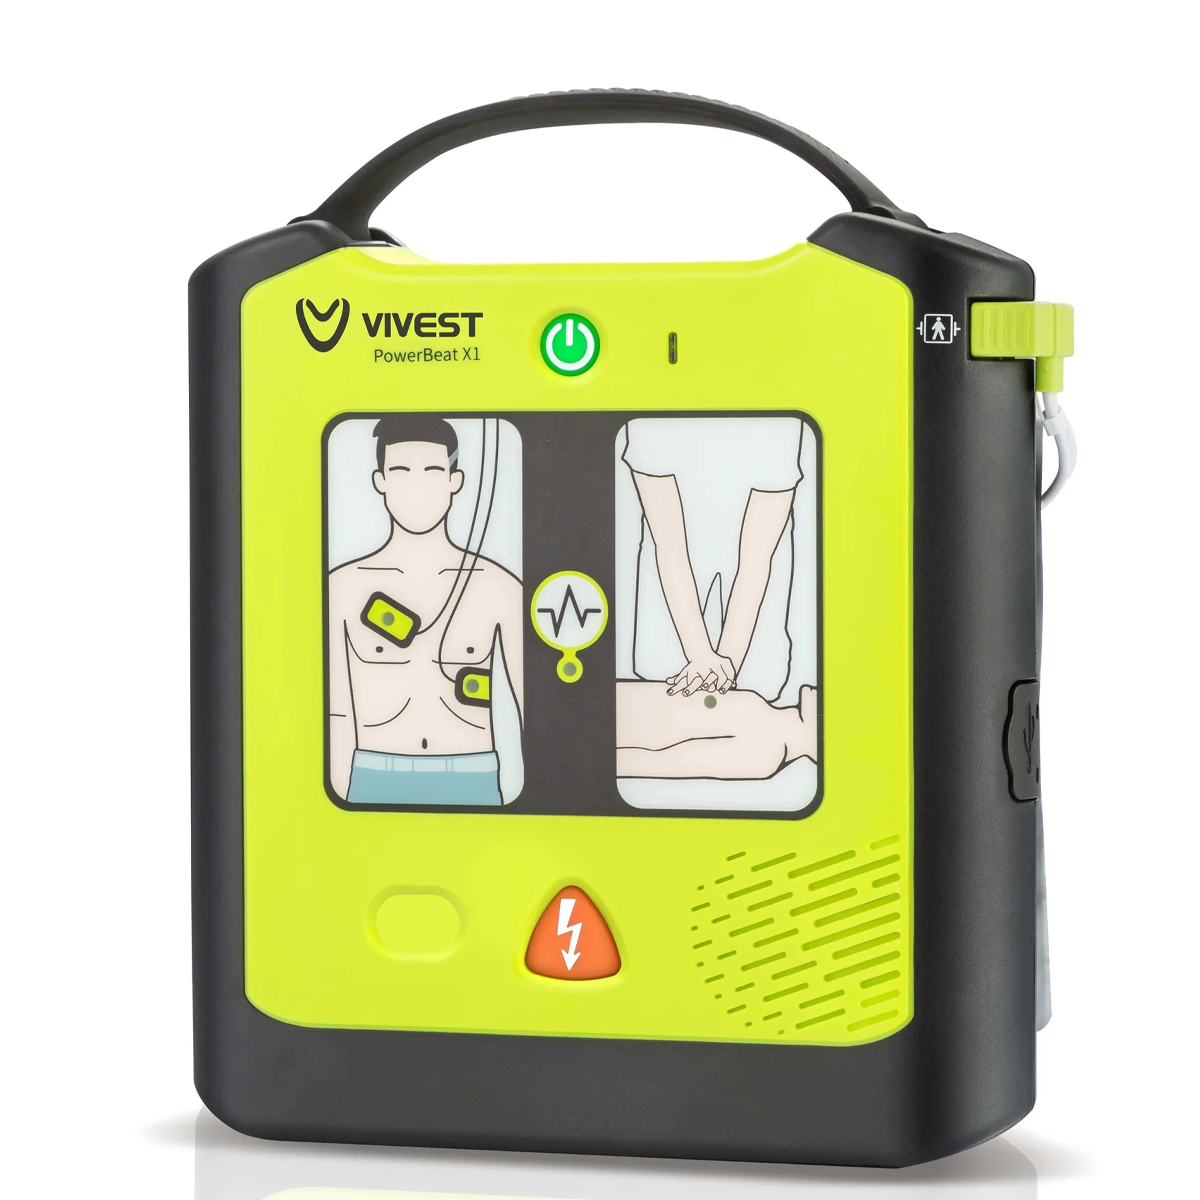 ViVest PowerBeat X1 Defibrillator